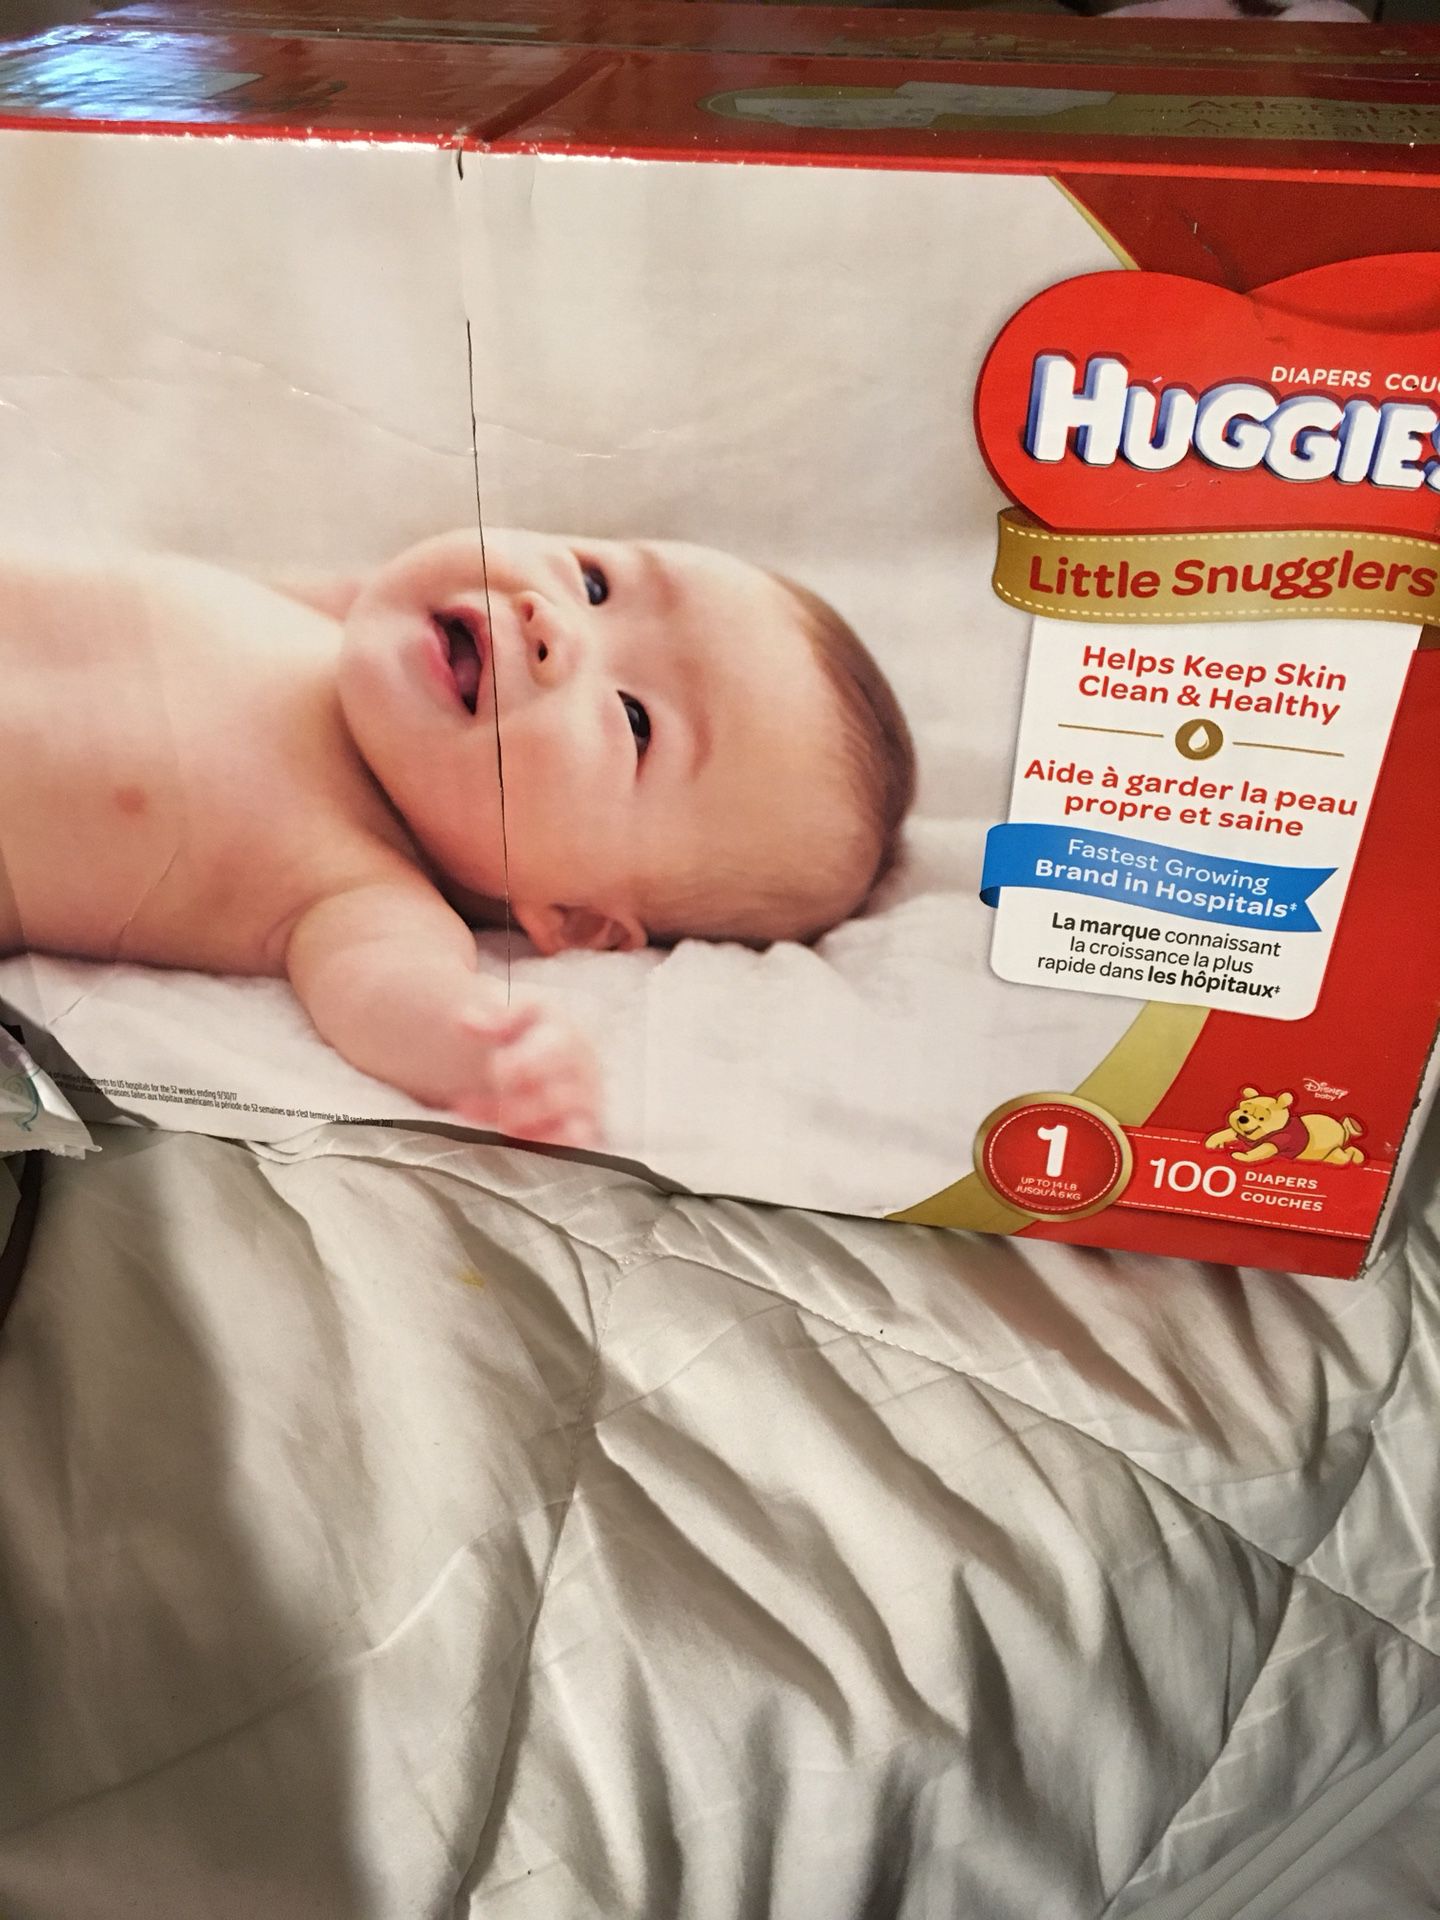 Huggies Size 1 diapers